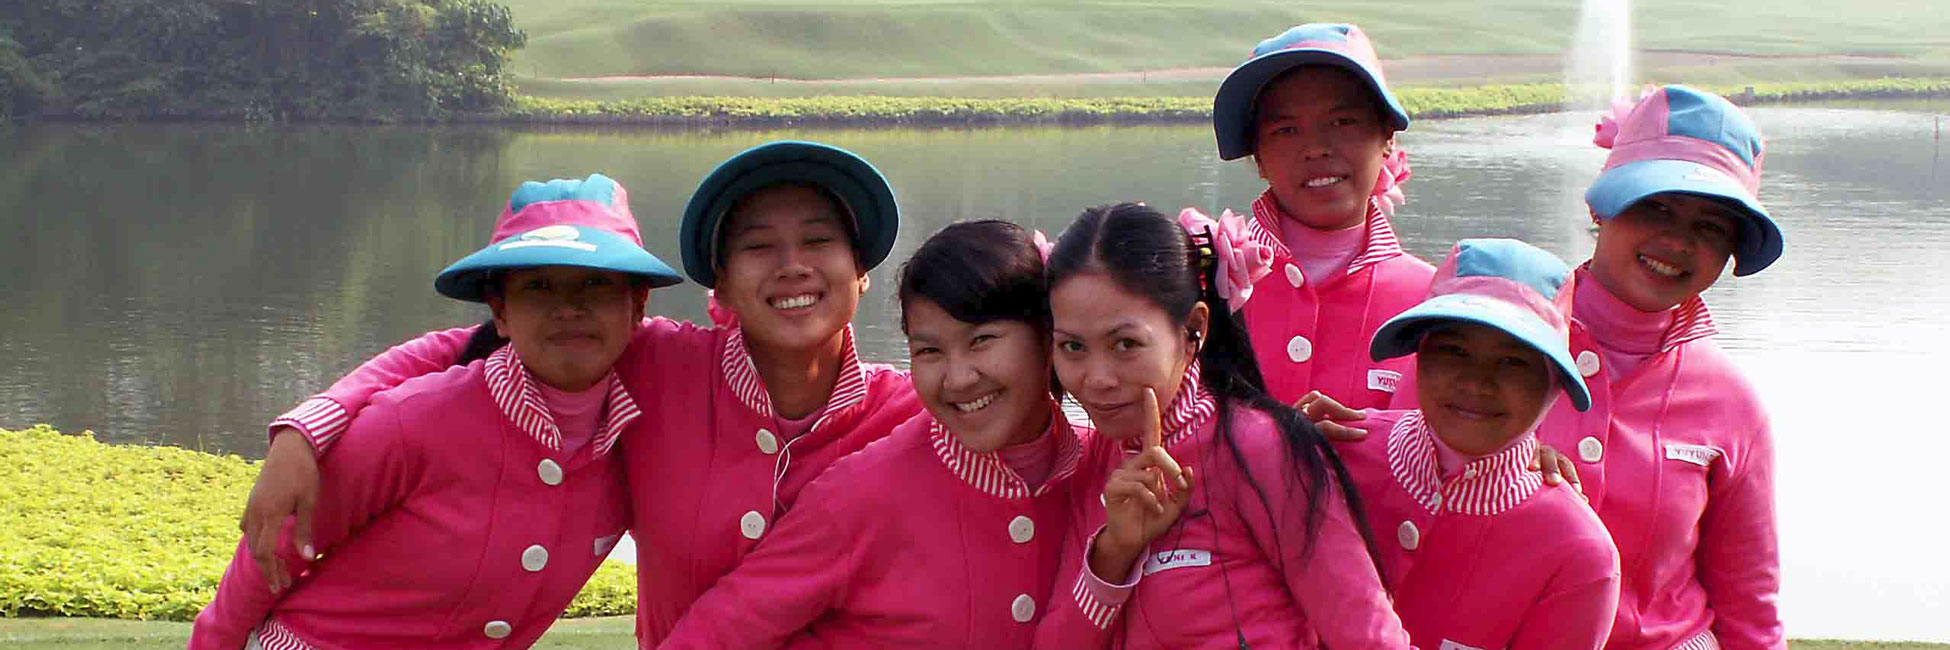 Jakarta Golf Courses